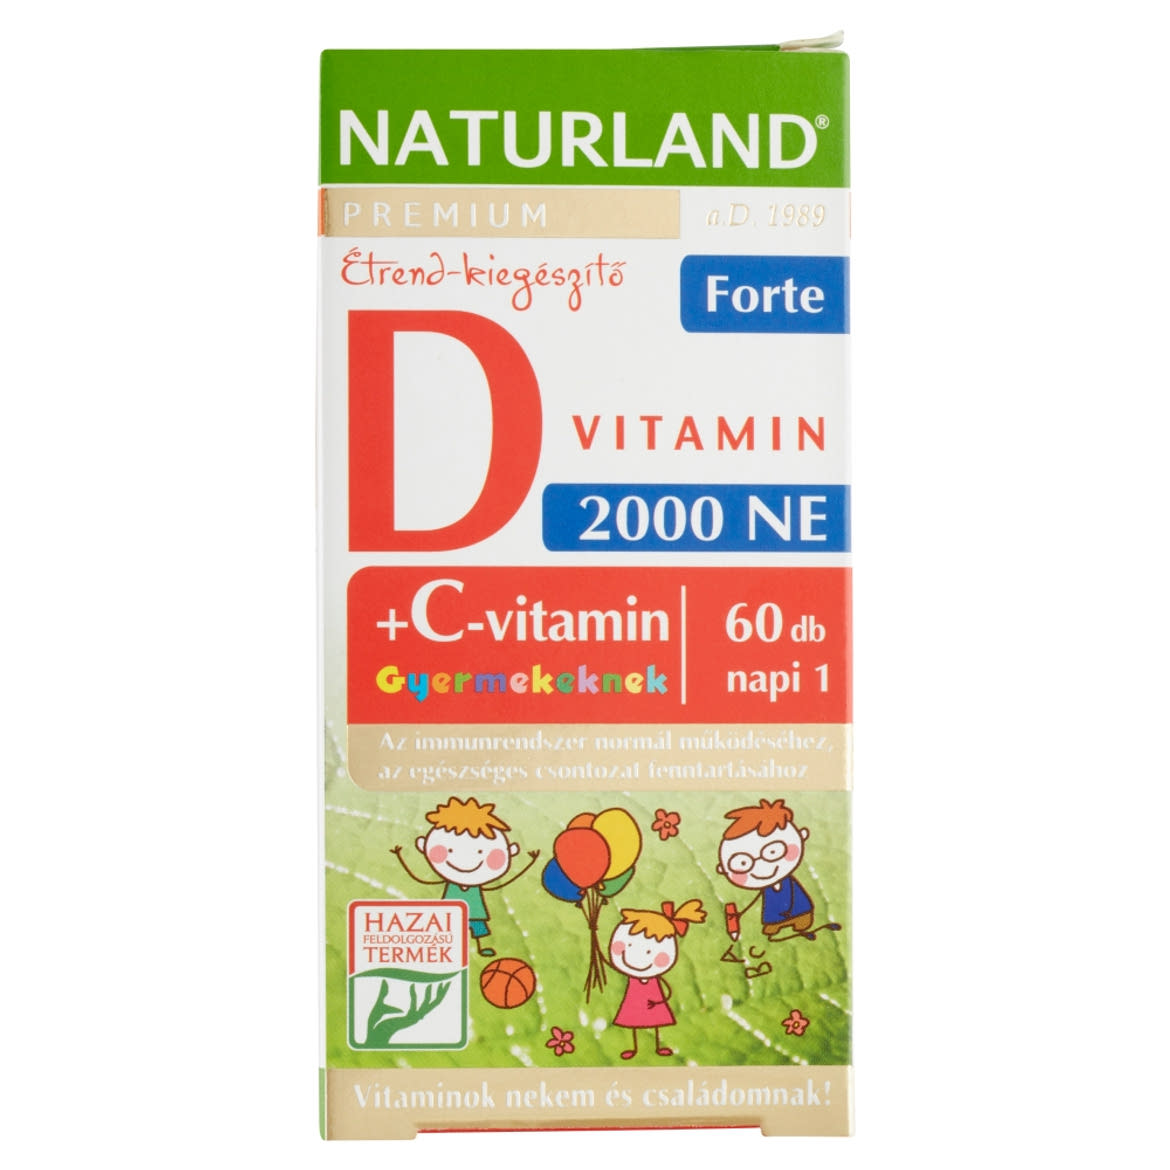 Naturland Premium D-vitamin 2000 NE + C-vitamin forte étrend-kiegészítő rágótabletta 890 g